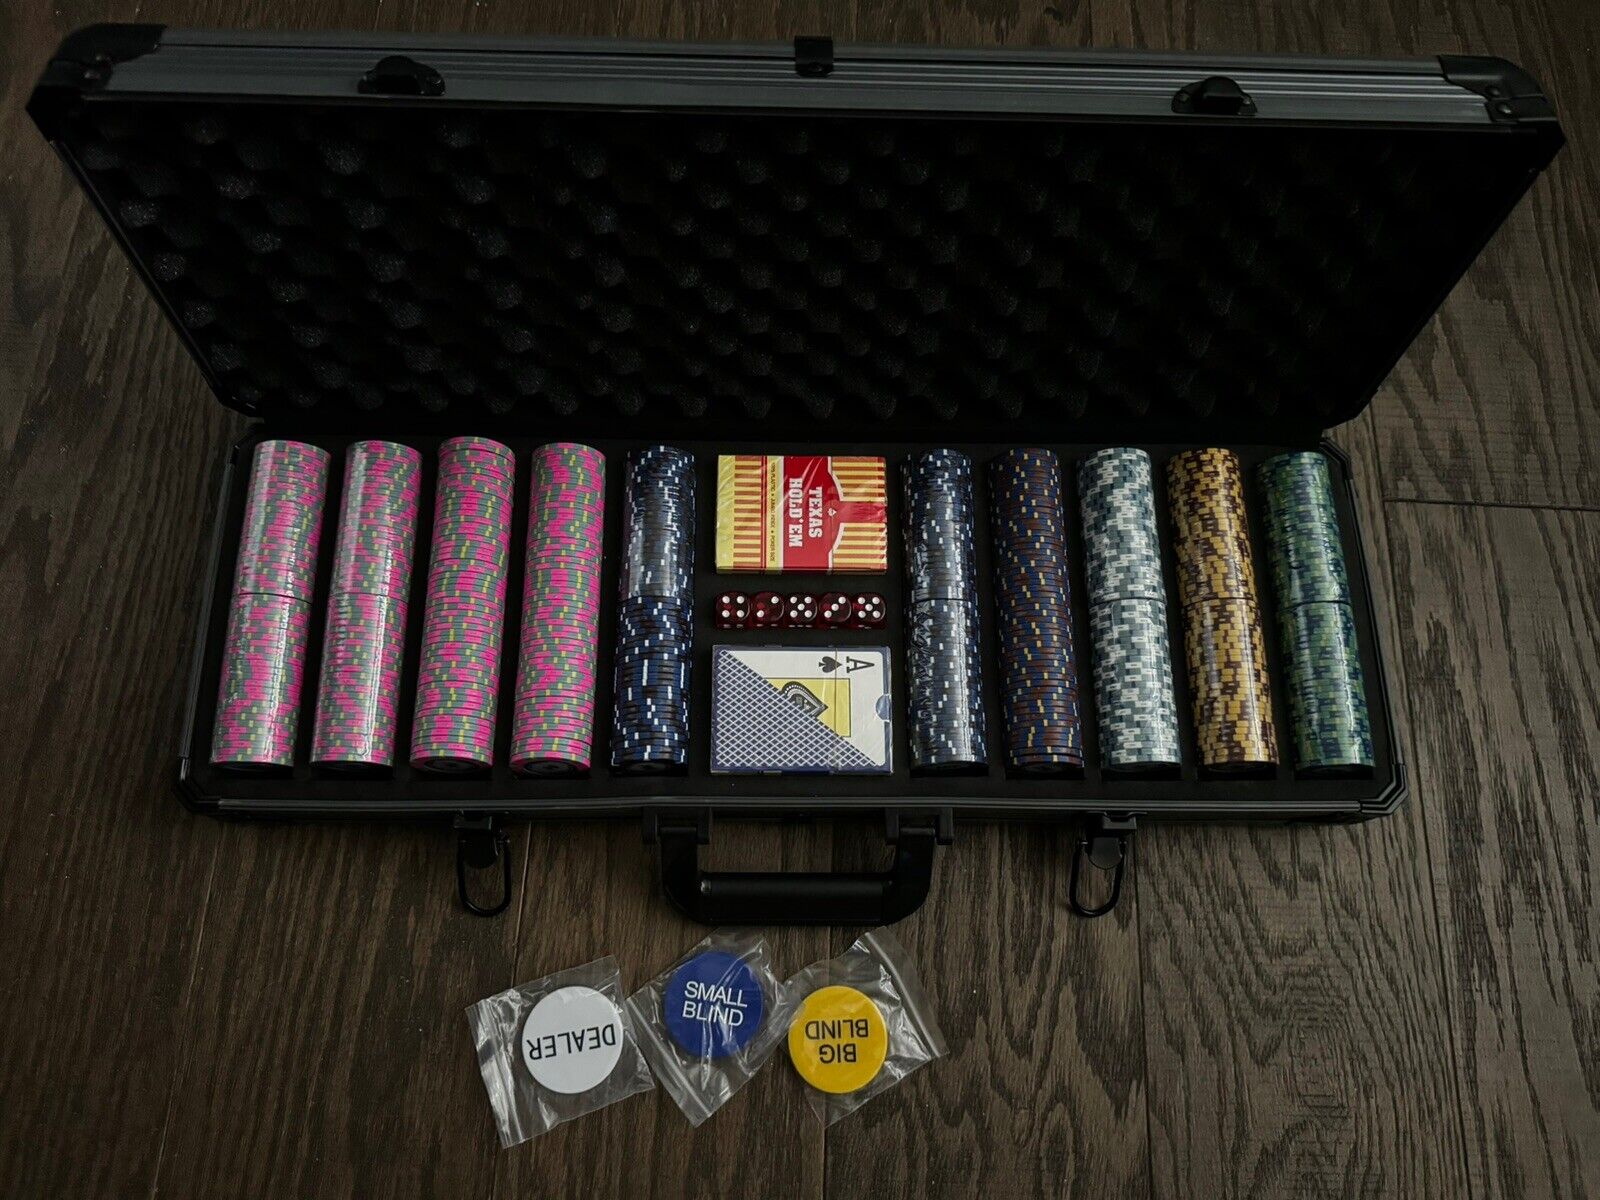 500 Piece Monte Carlo Low Denomination Poker Chip Set - 14g Heavy Clay Chips